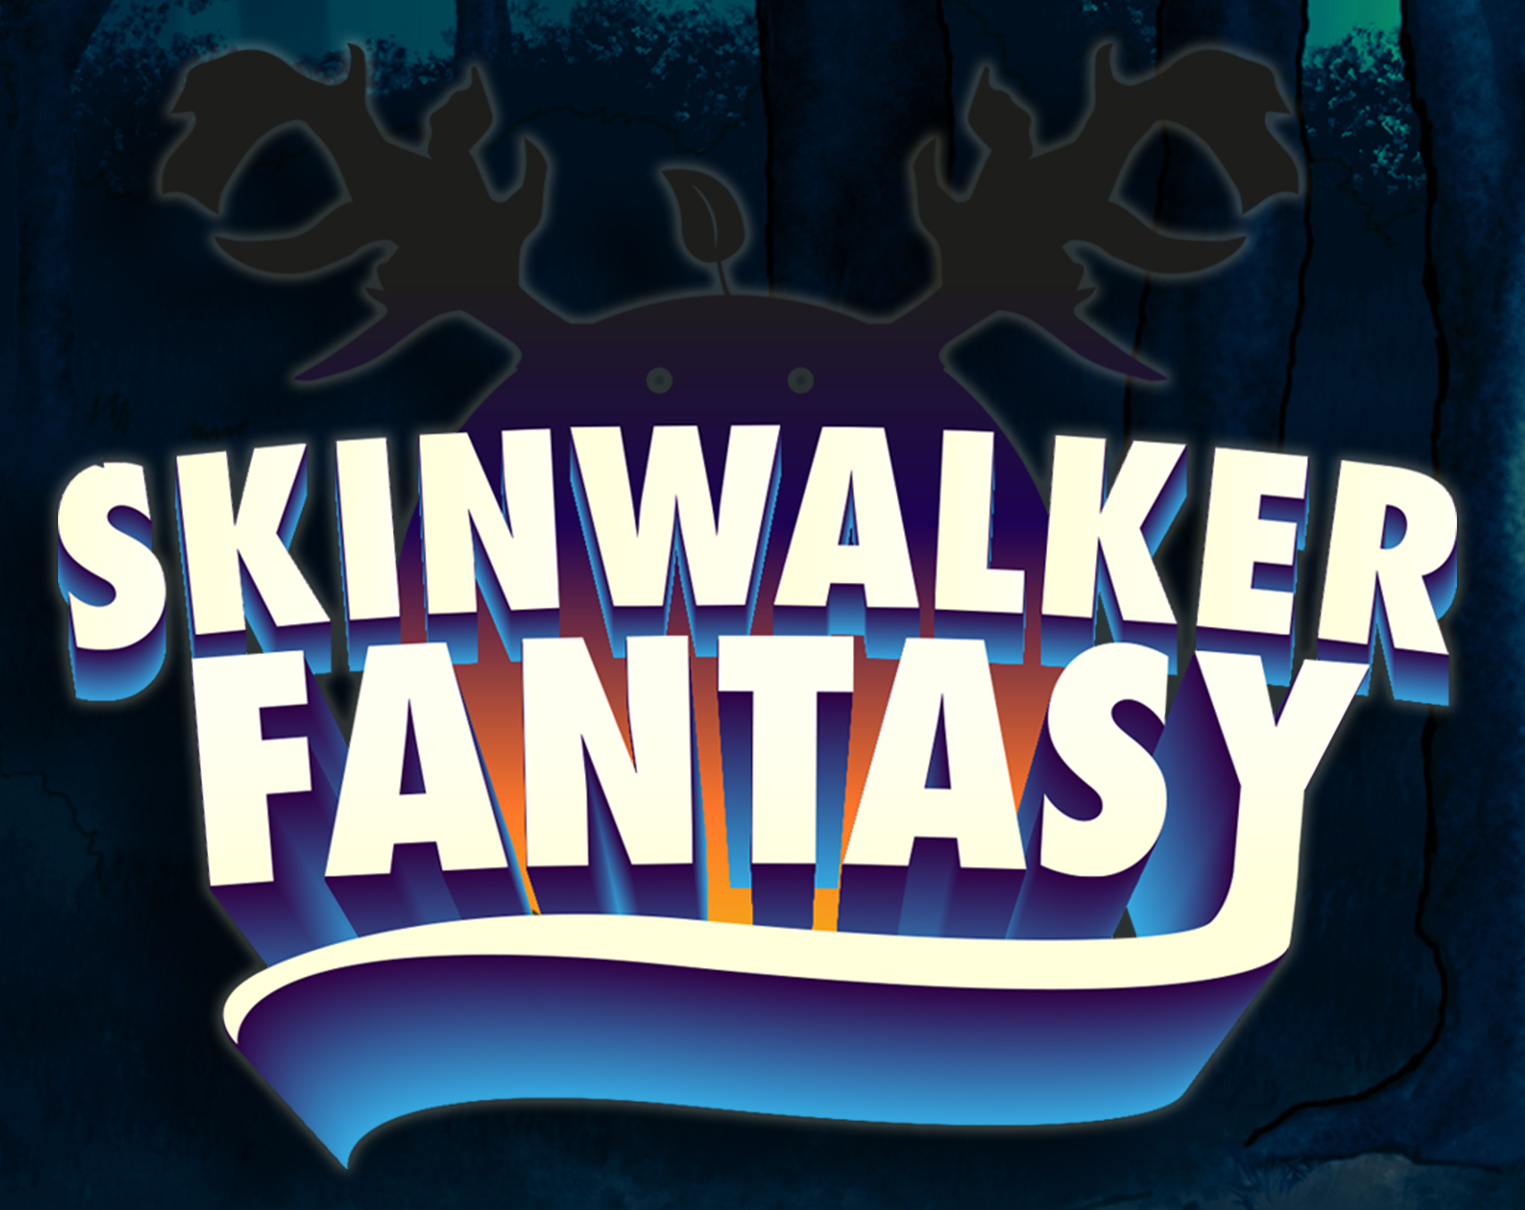 A Skinwalker Fantasy